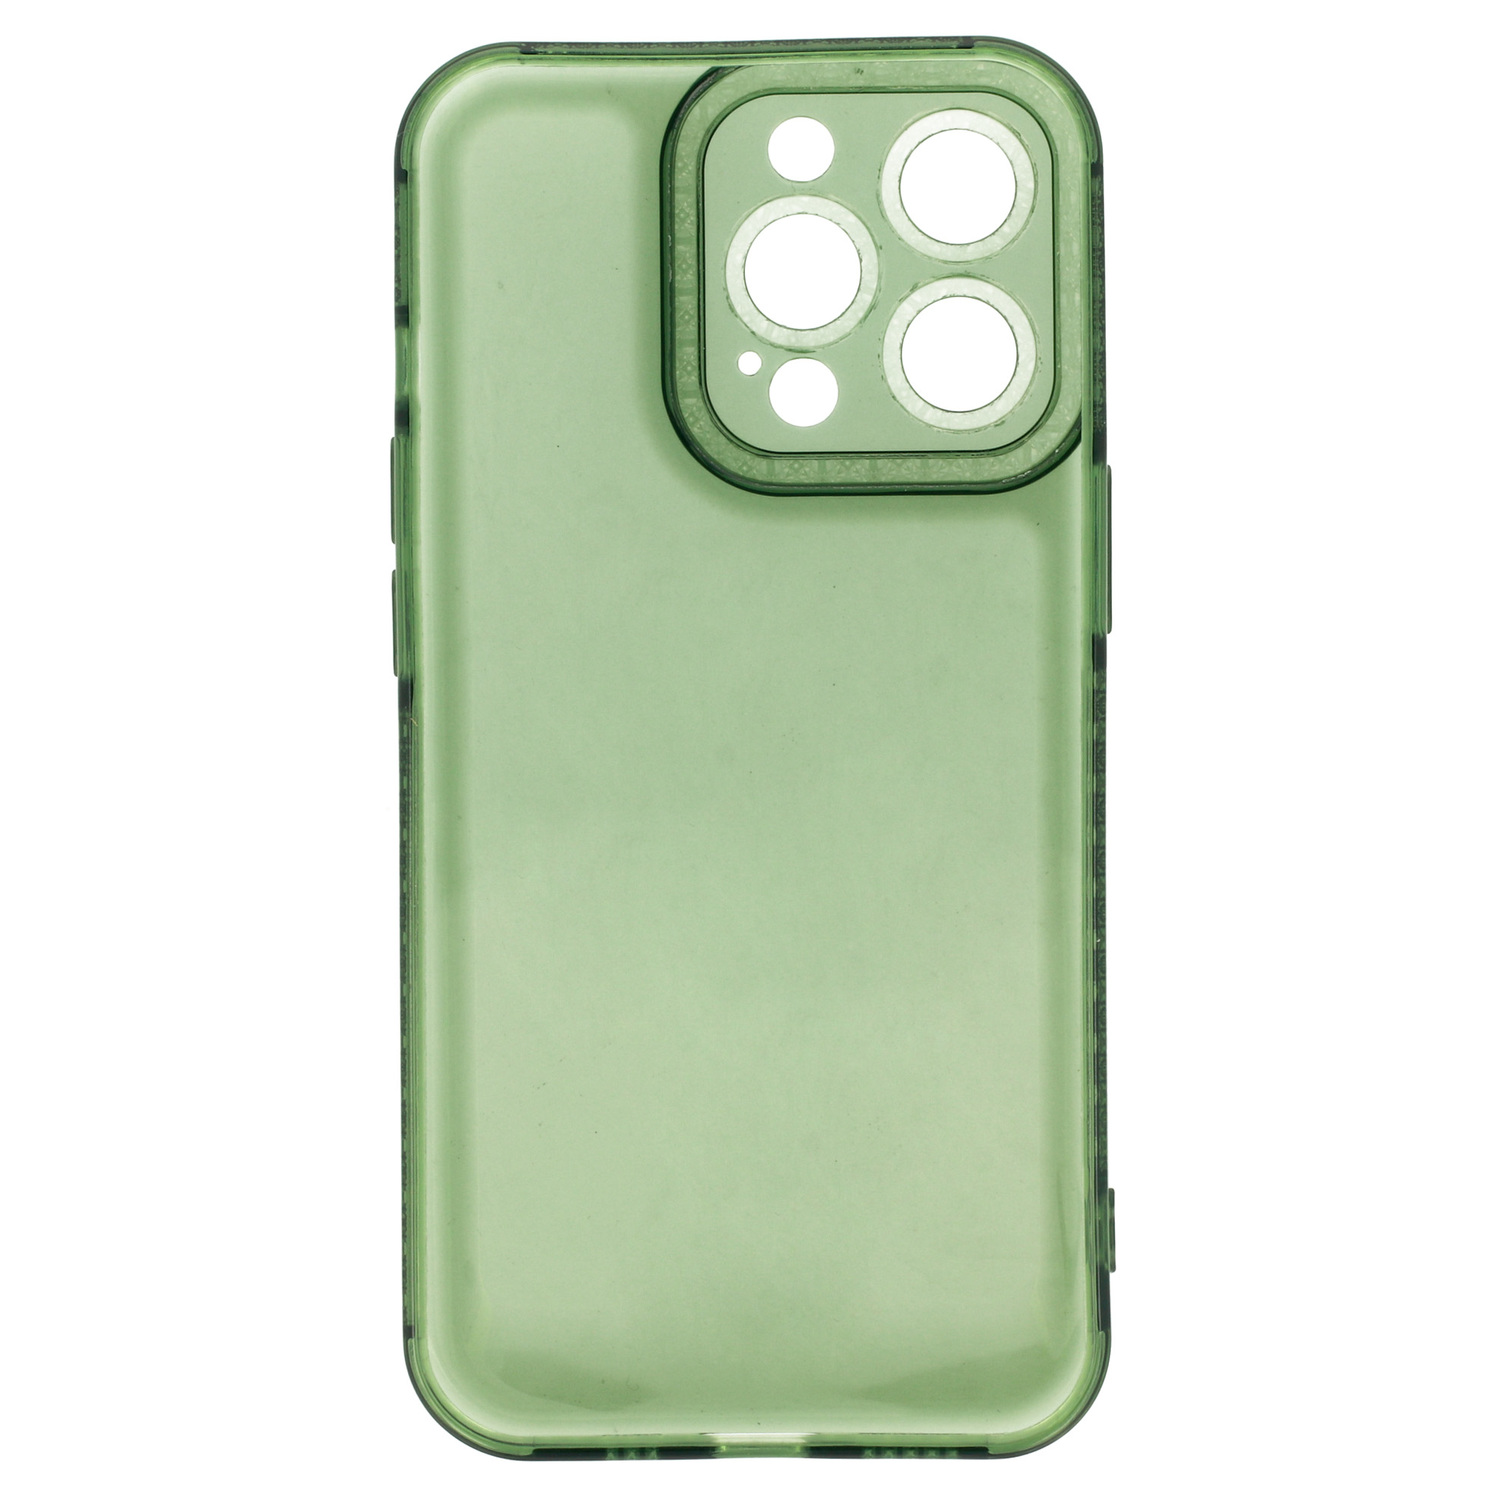 Pokrowiec etui silikonowe Crystal Diamond Case zielone APPLE iPhone 11 Pro / 5